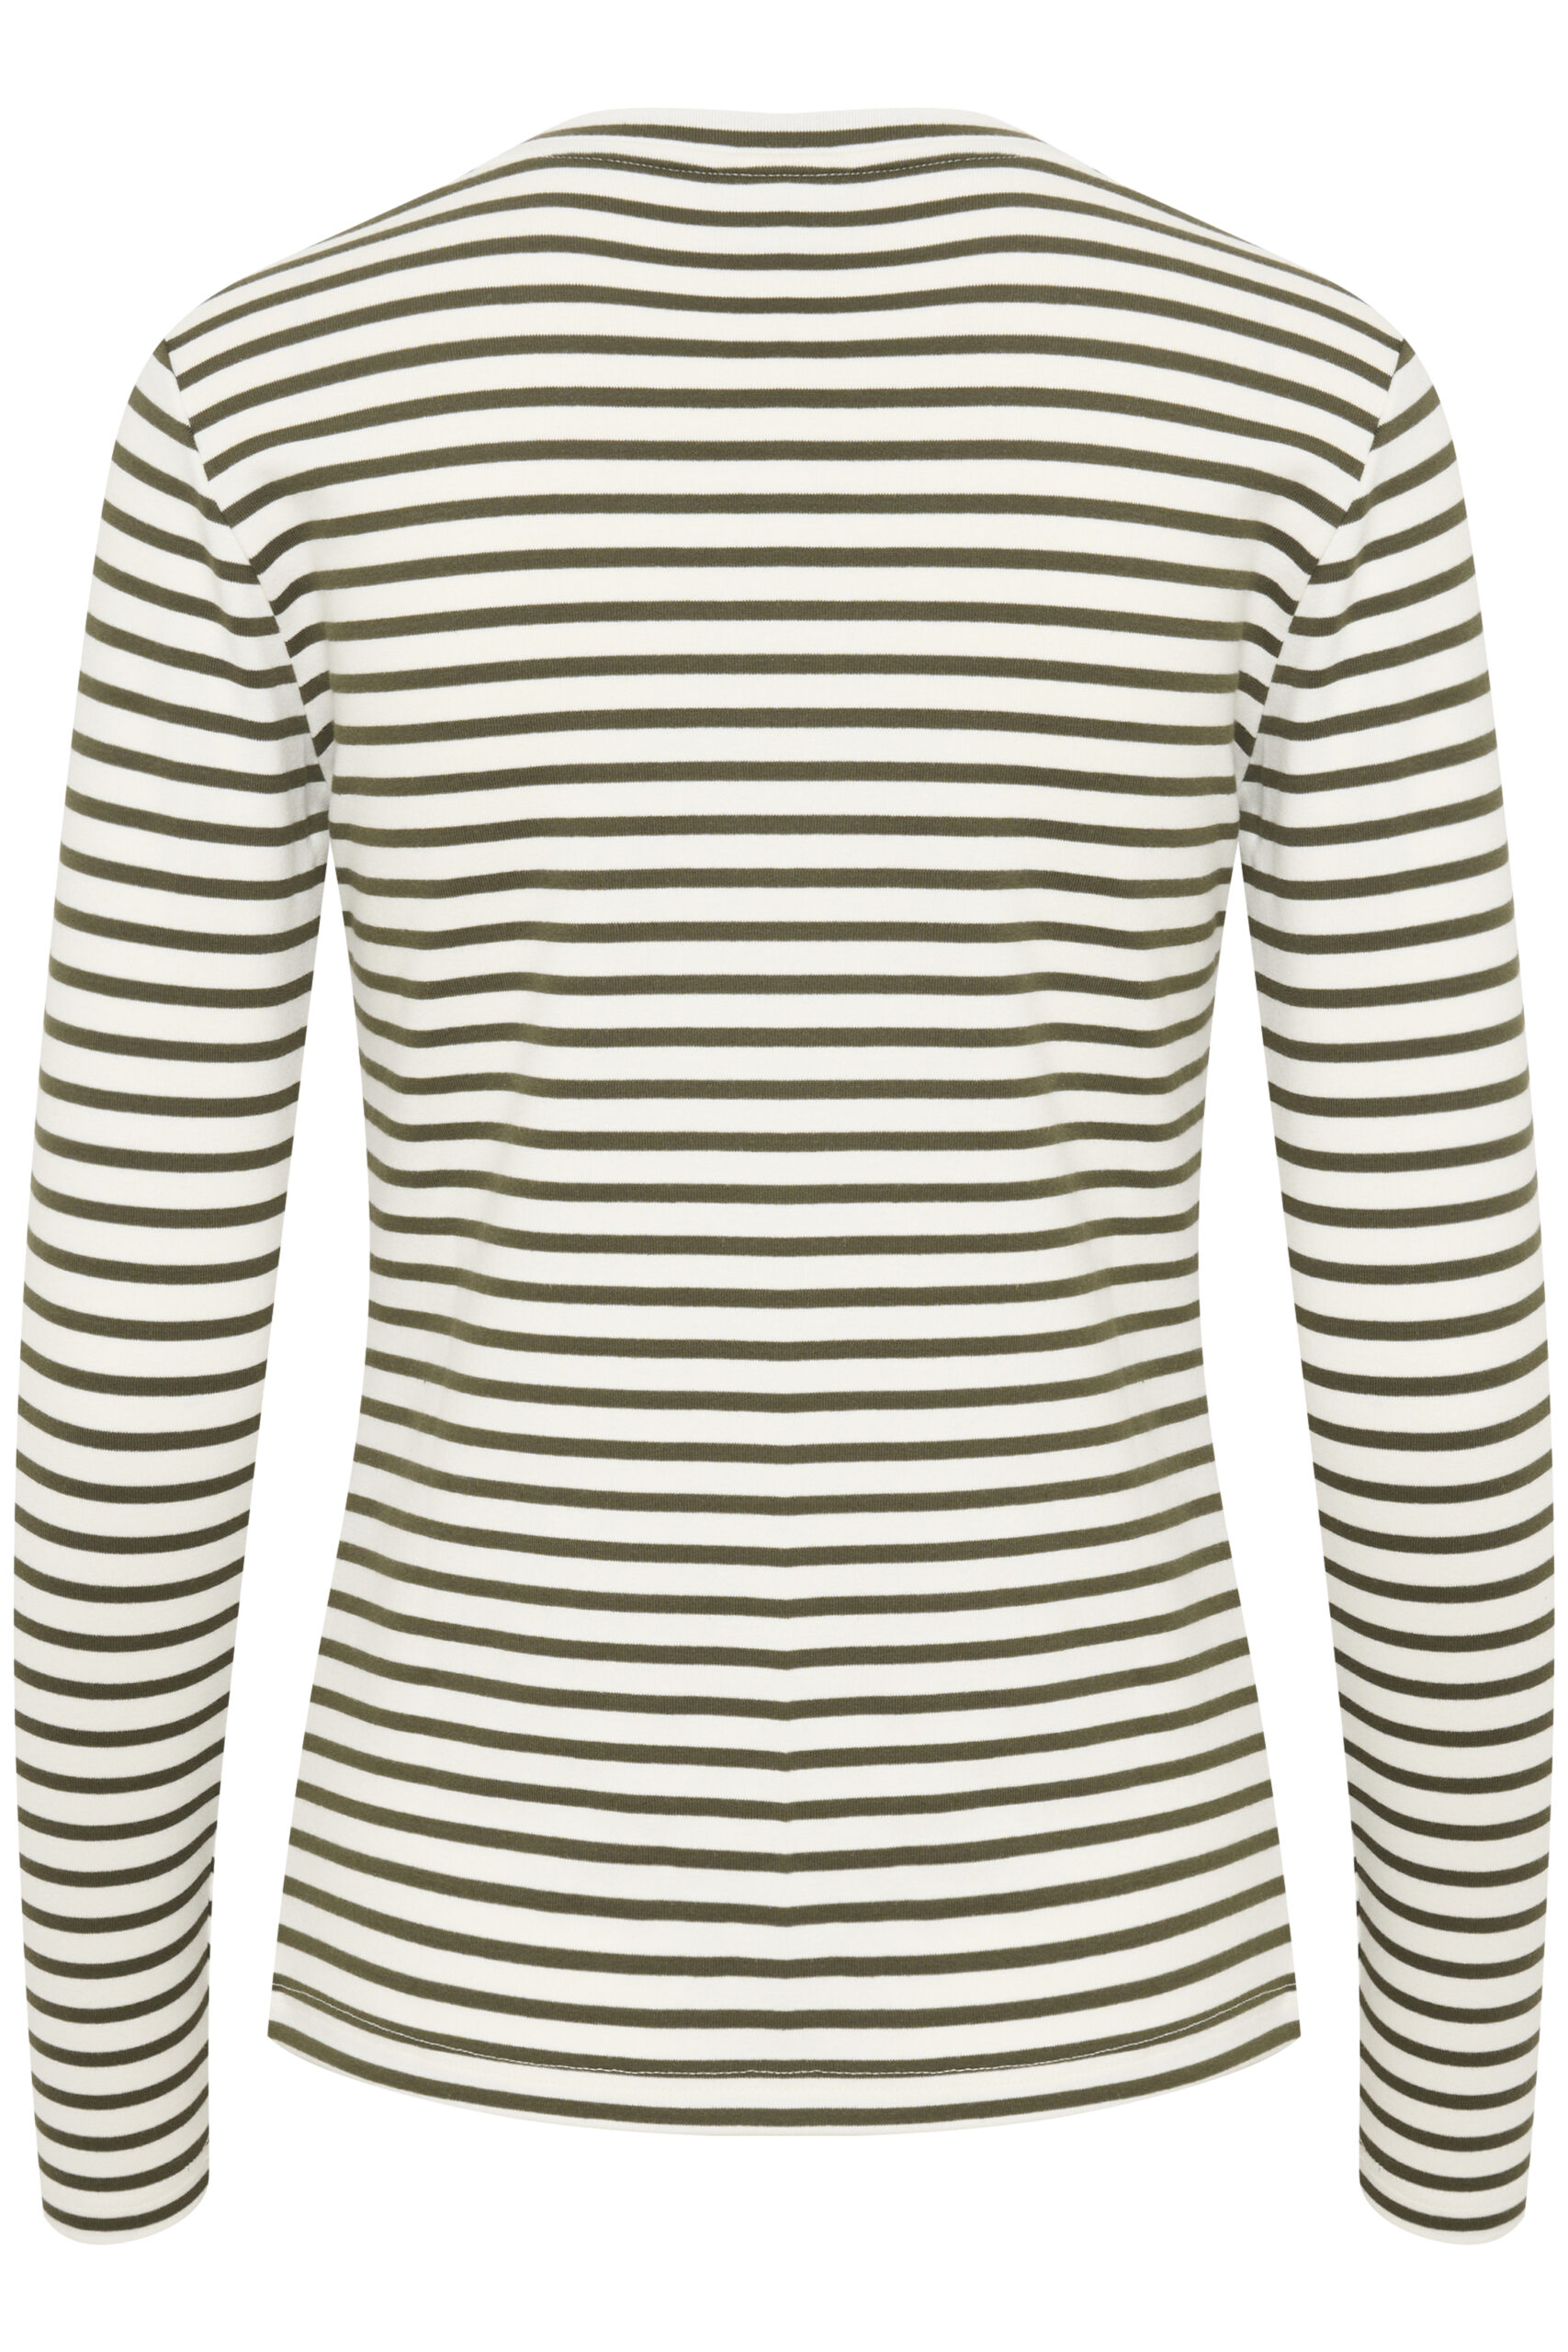 KAliddy Forest Stripe T-Shirt item back